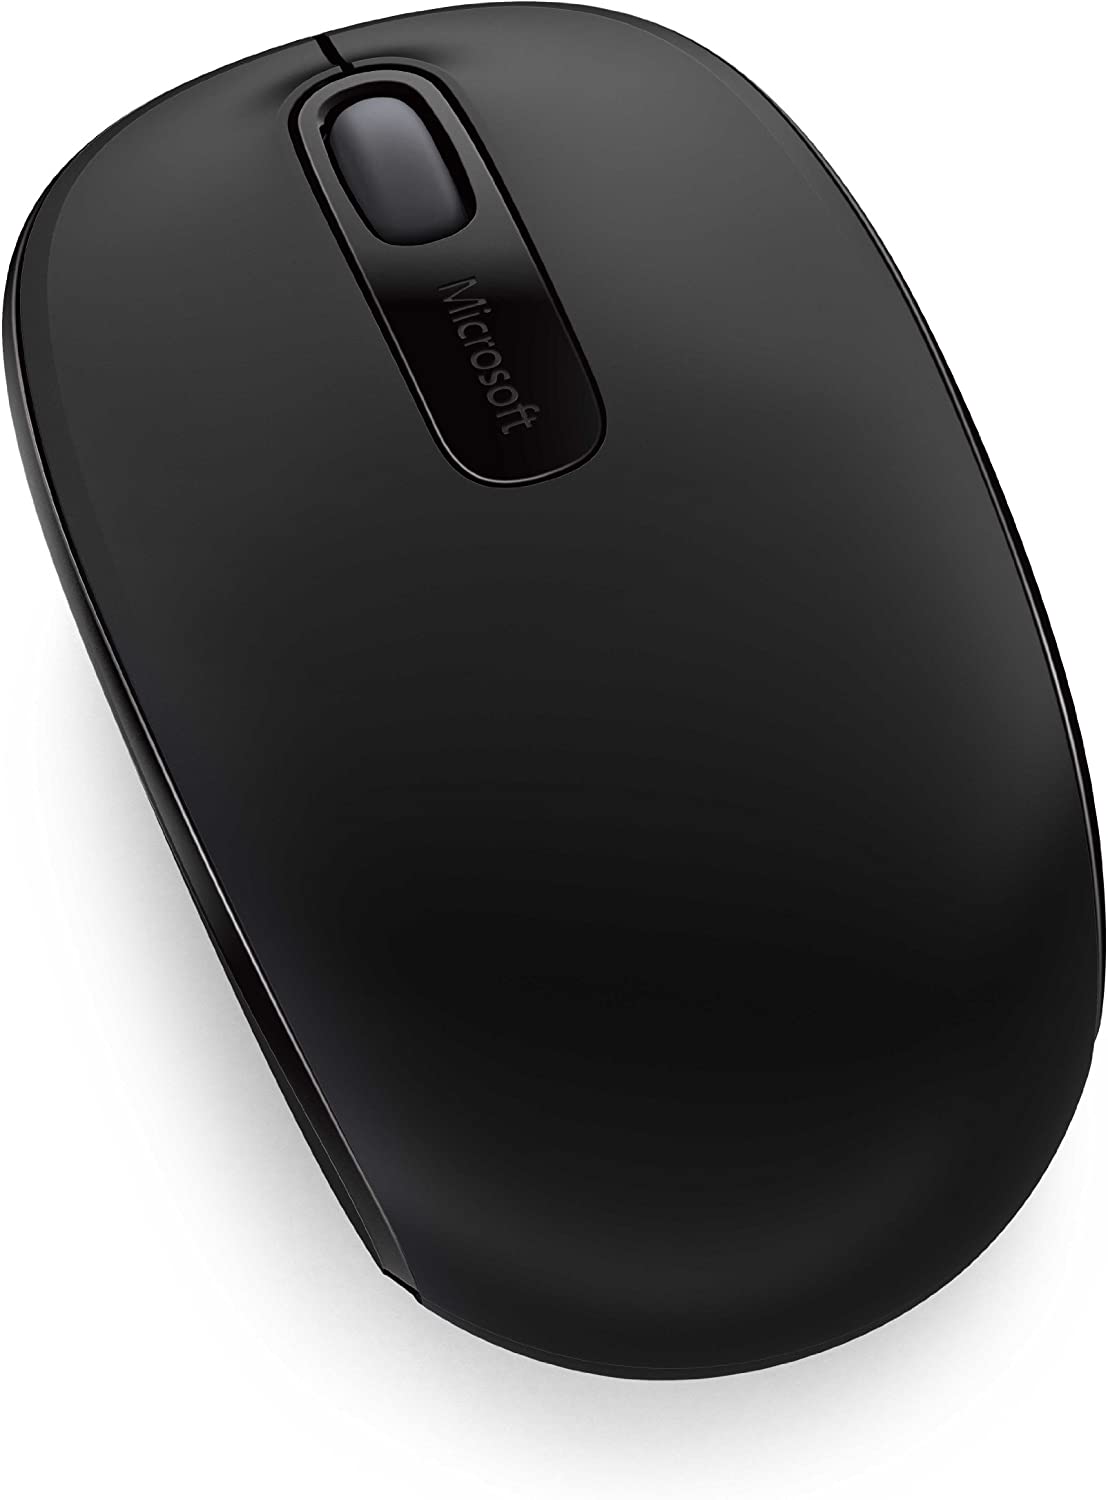 Microsoft Wireless Portable Mouse 1850 - Black